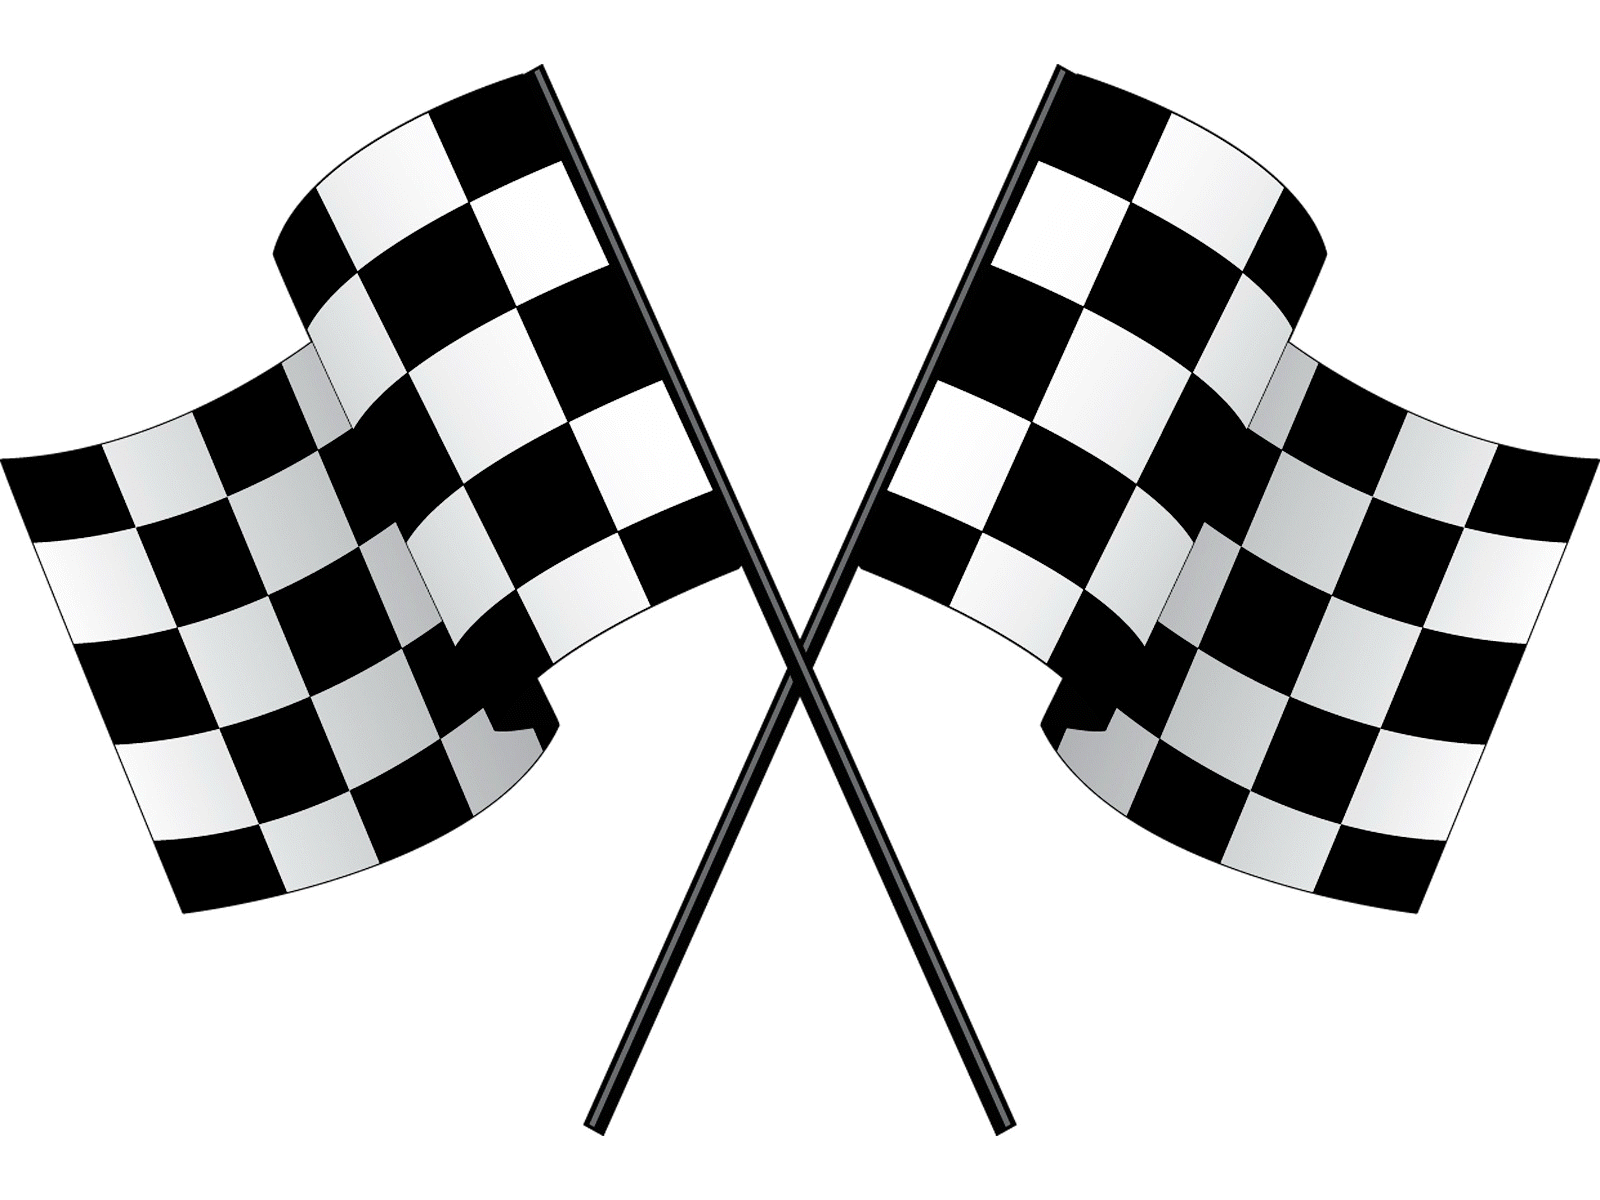 Checkered Racing Flags Clip A